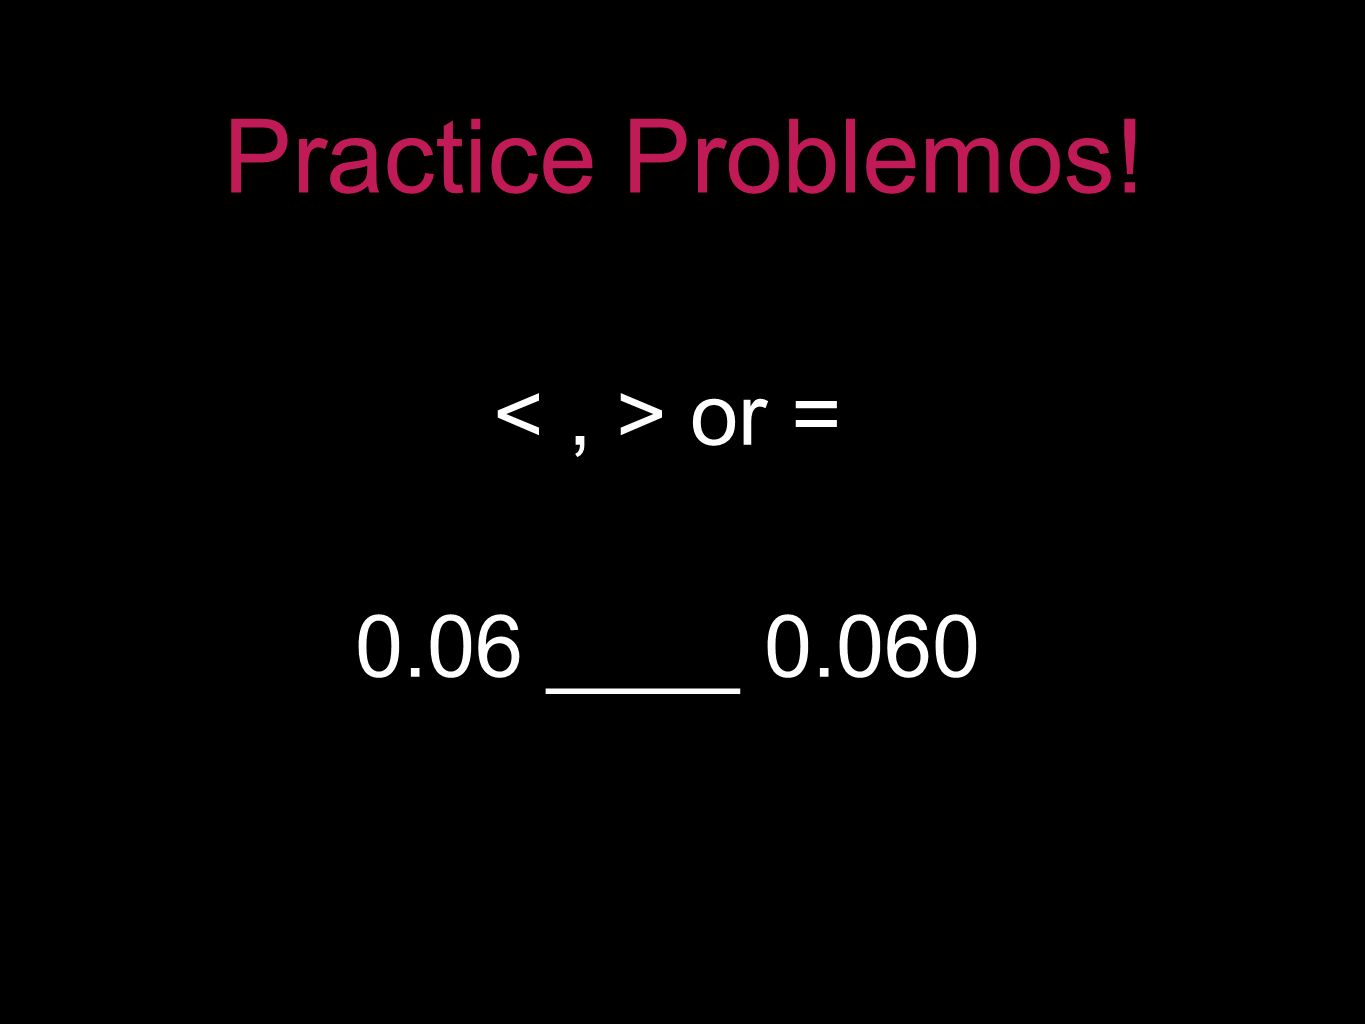 Practice Problemos! 0.06 ____ or =